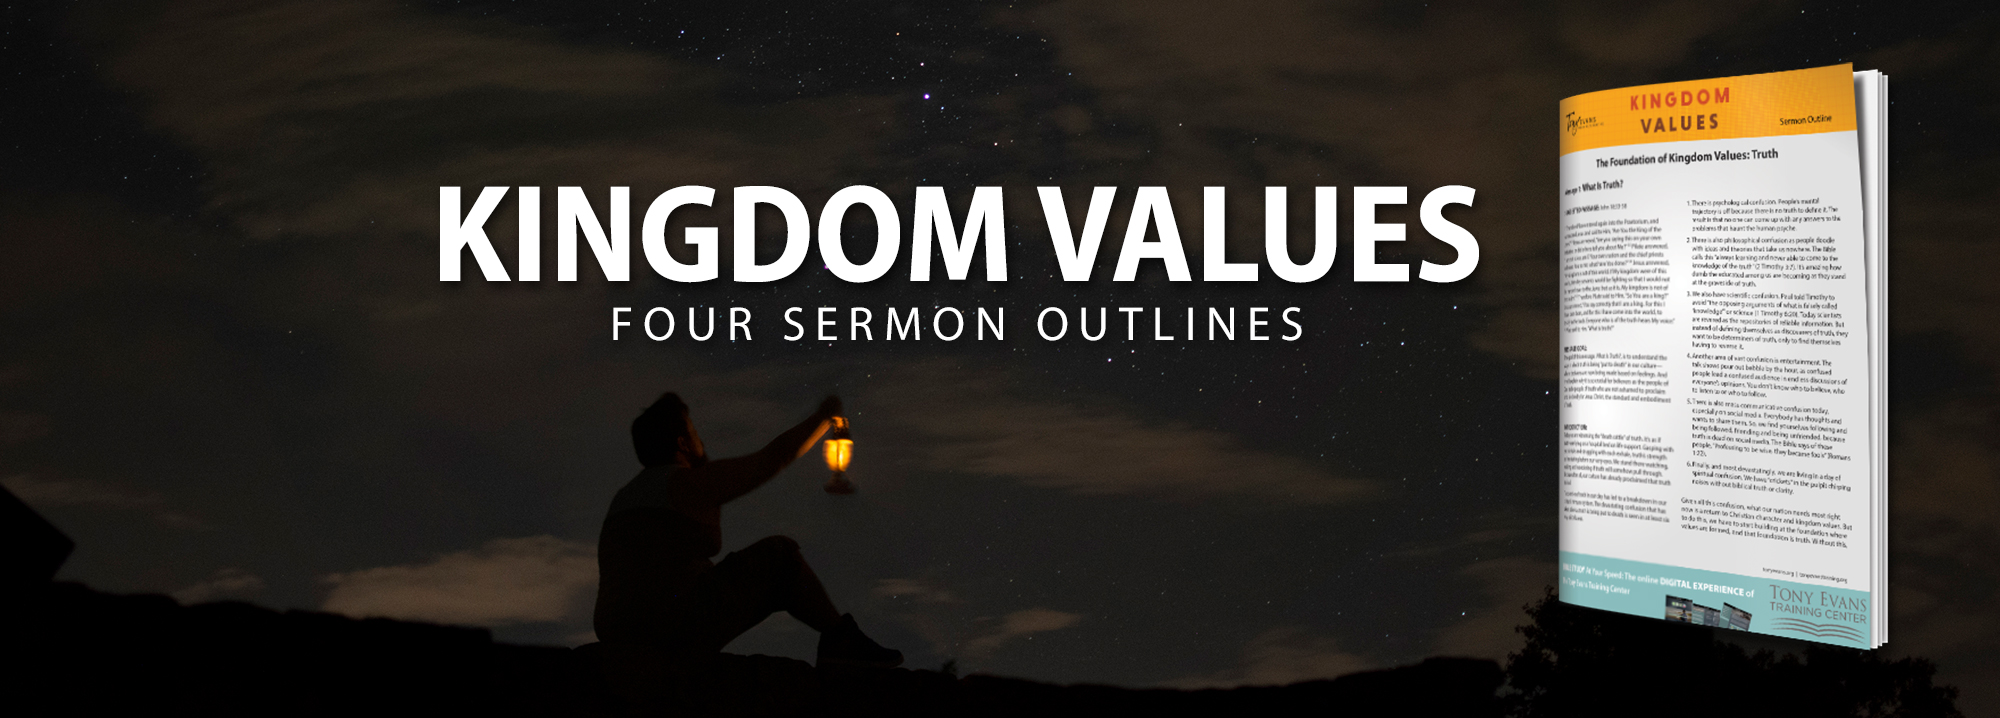 Kingdom Values Sermon Outline